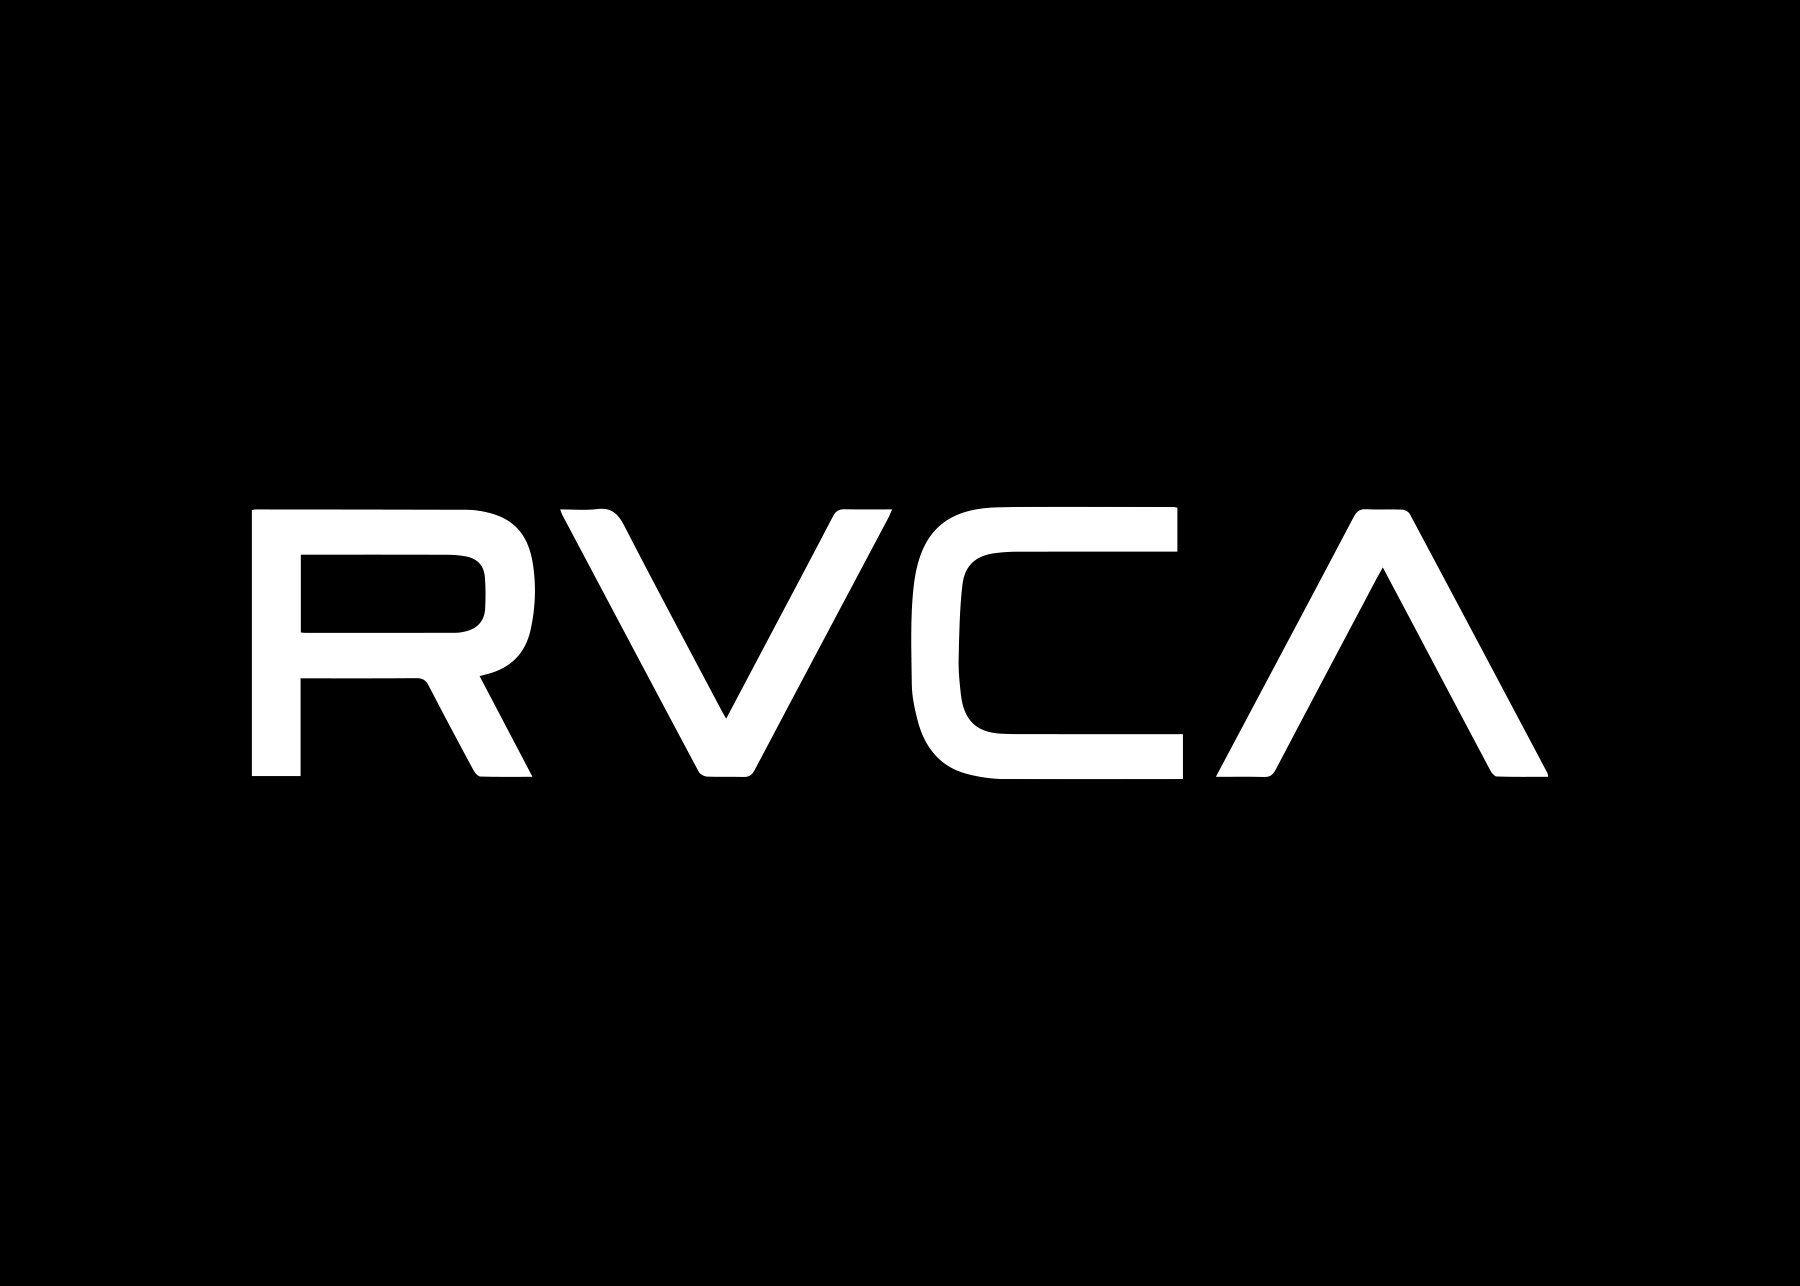 RVCA Logo - RVCA Surf Skate Snow Decal Sticker Graphic | The Decal God